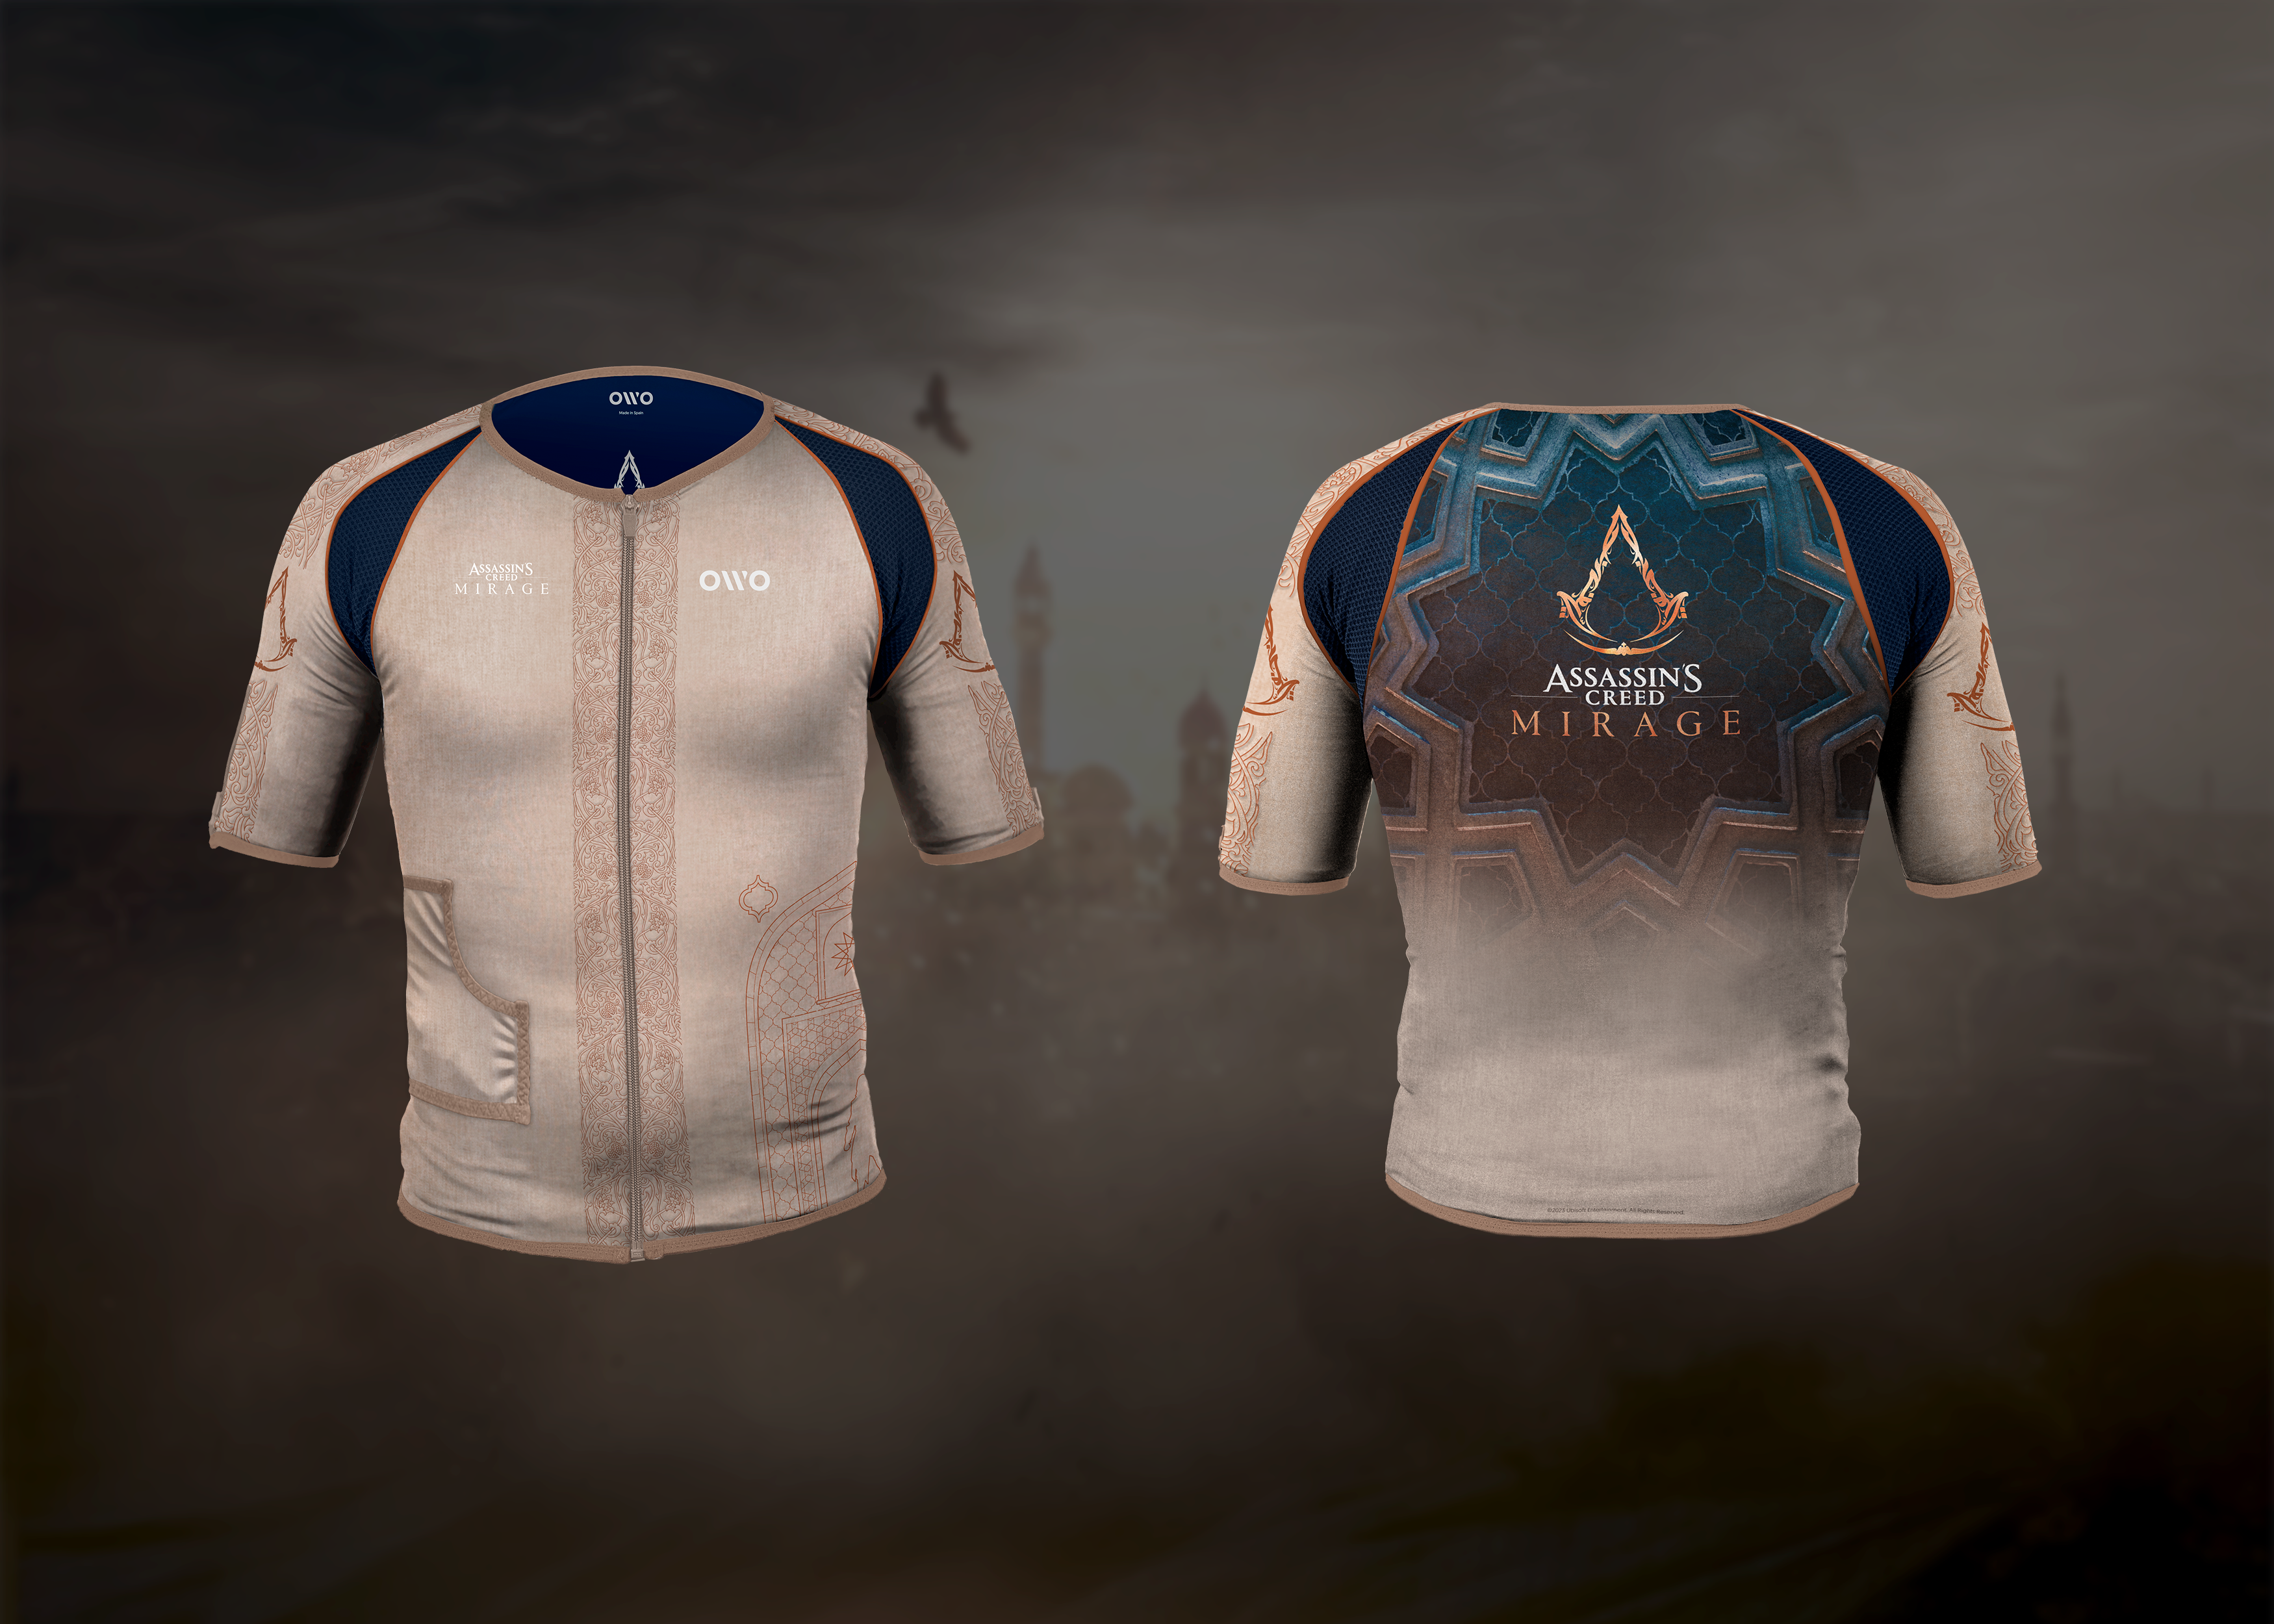 Die Assassin's Creed Mirage Version der OWO Haptic Vest @ OWO Game